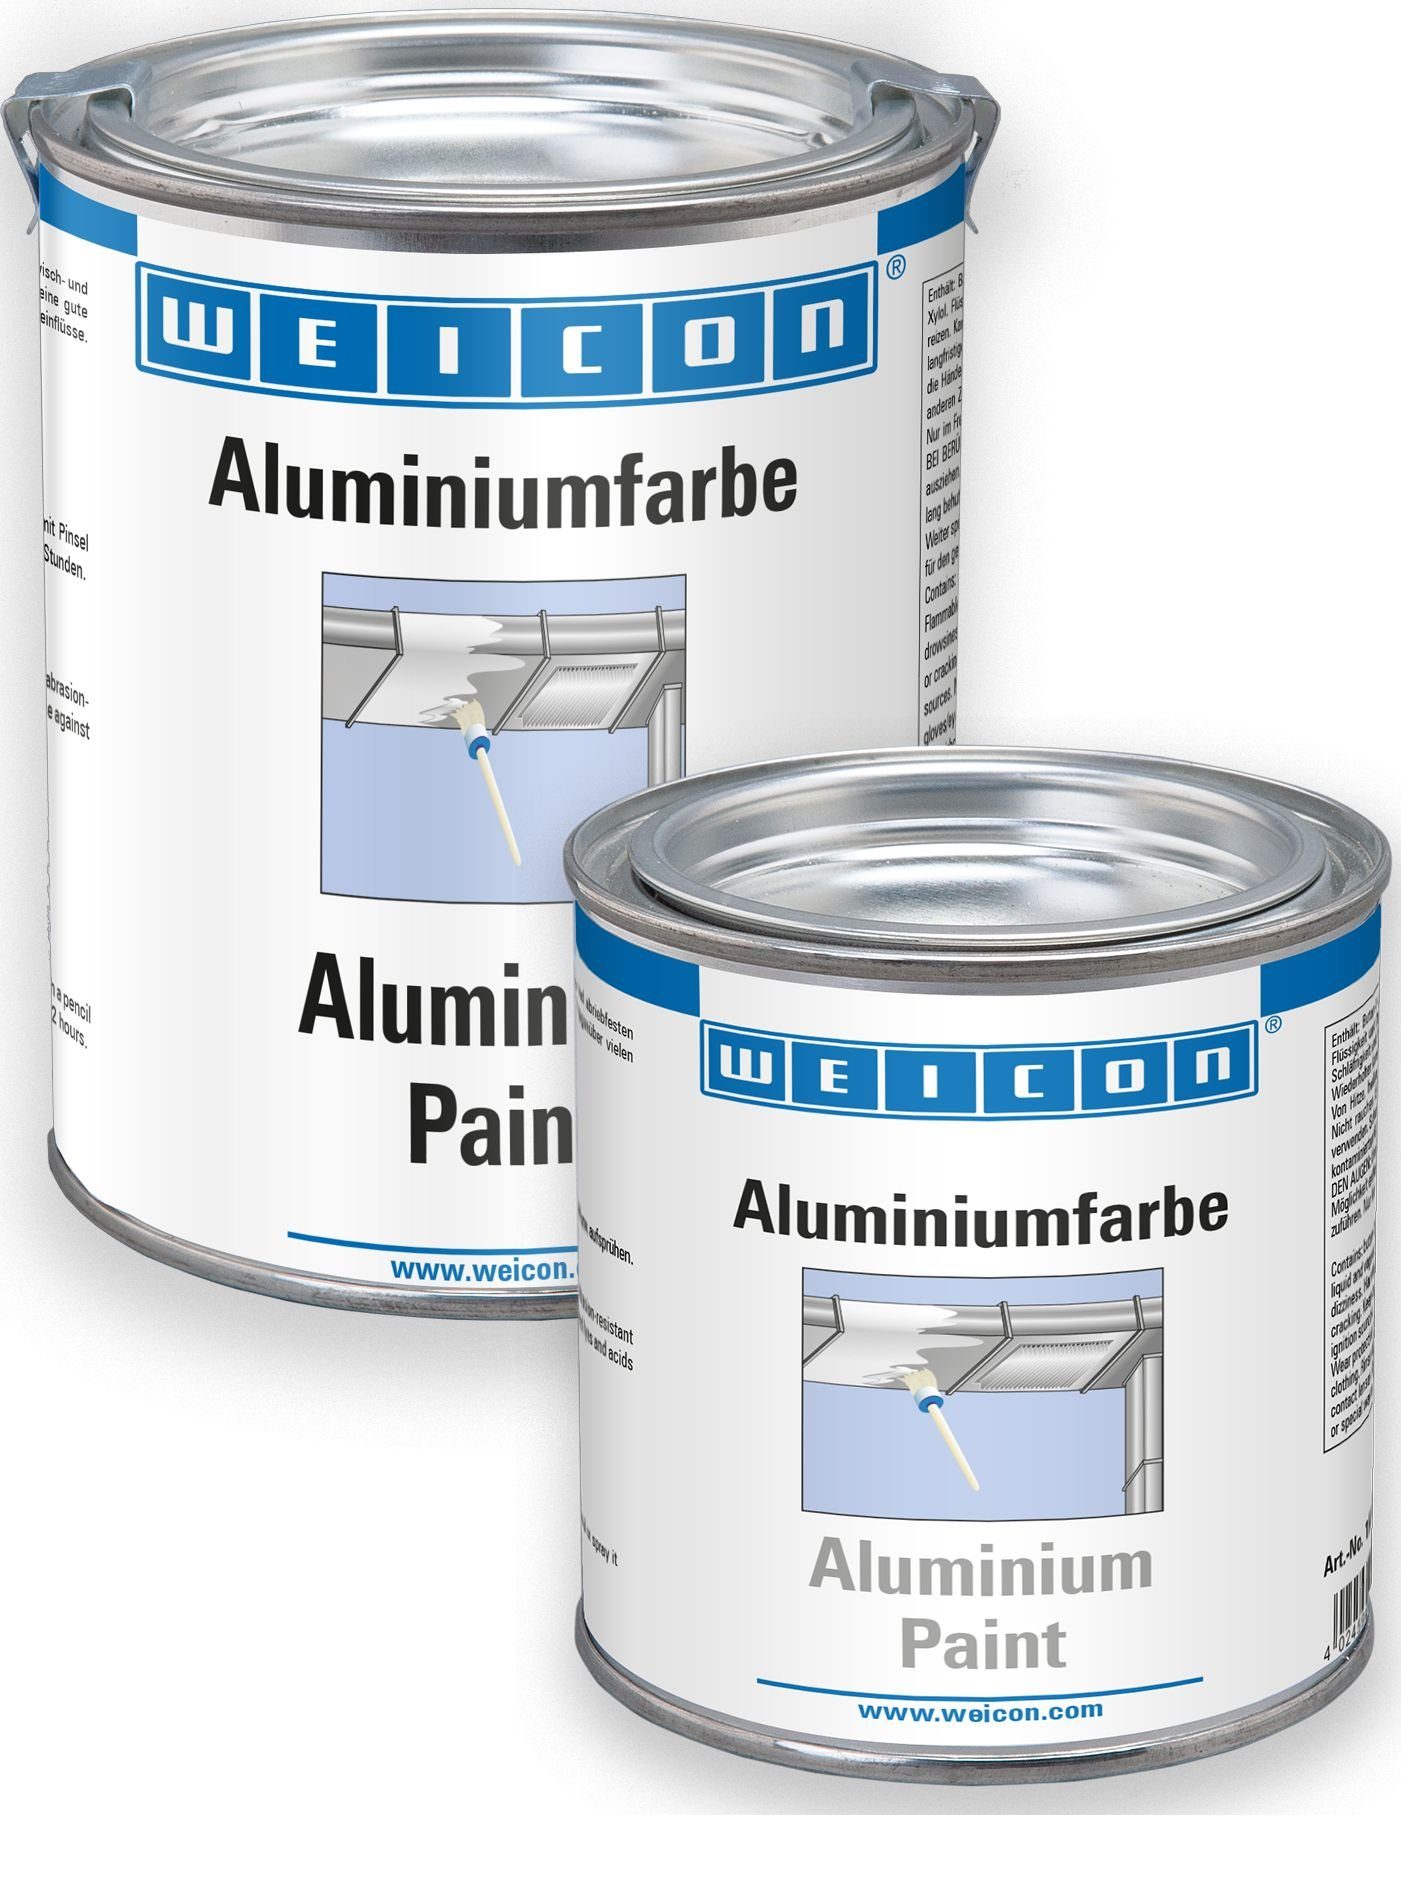 Metallglanzfarbe aus Korrosionsschutz Aluminiumfarbe, WEICON Aluminiumpigmentbeschichtung